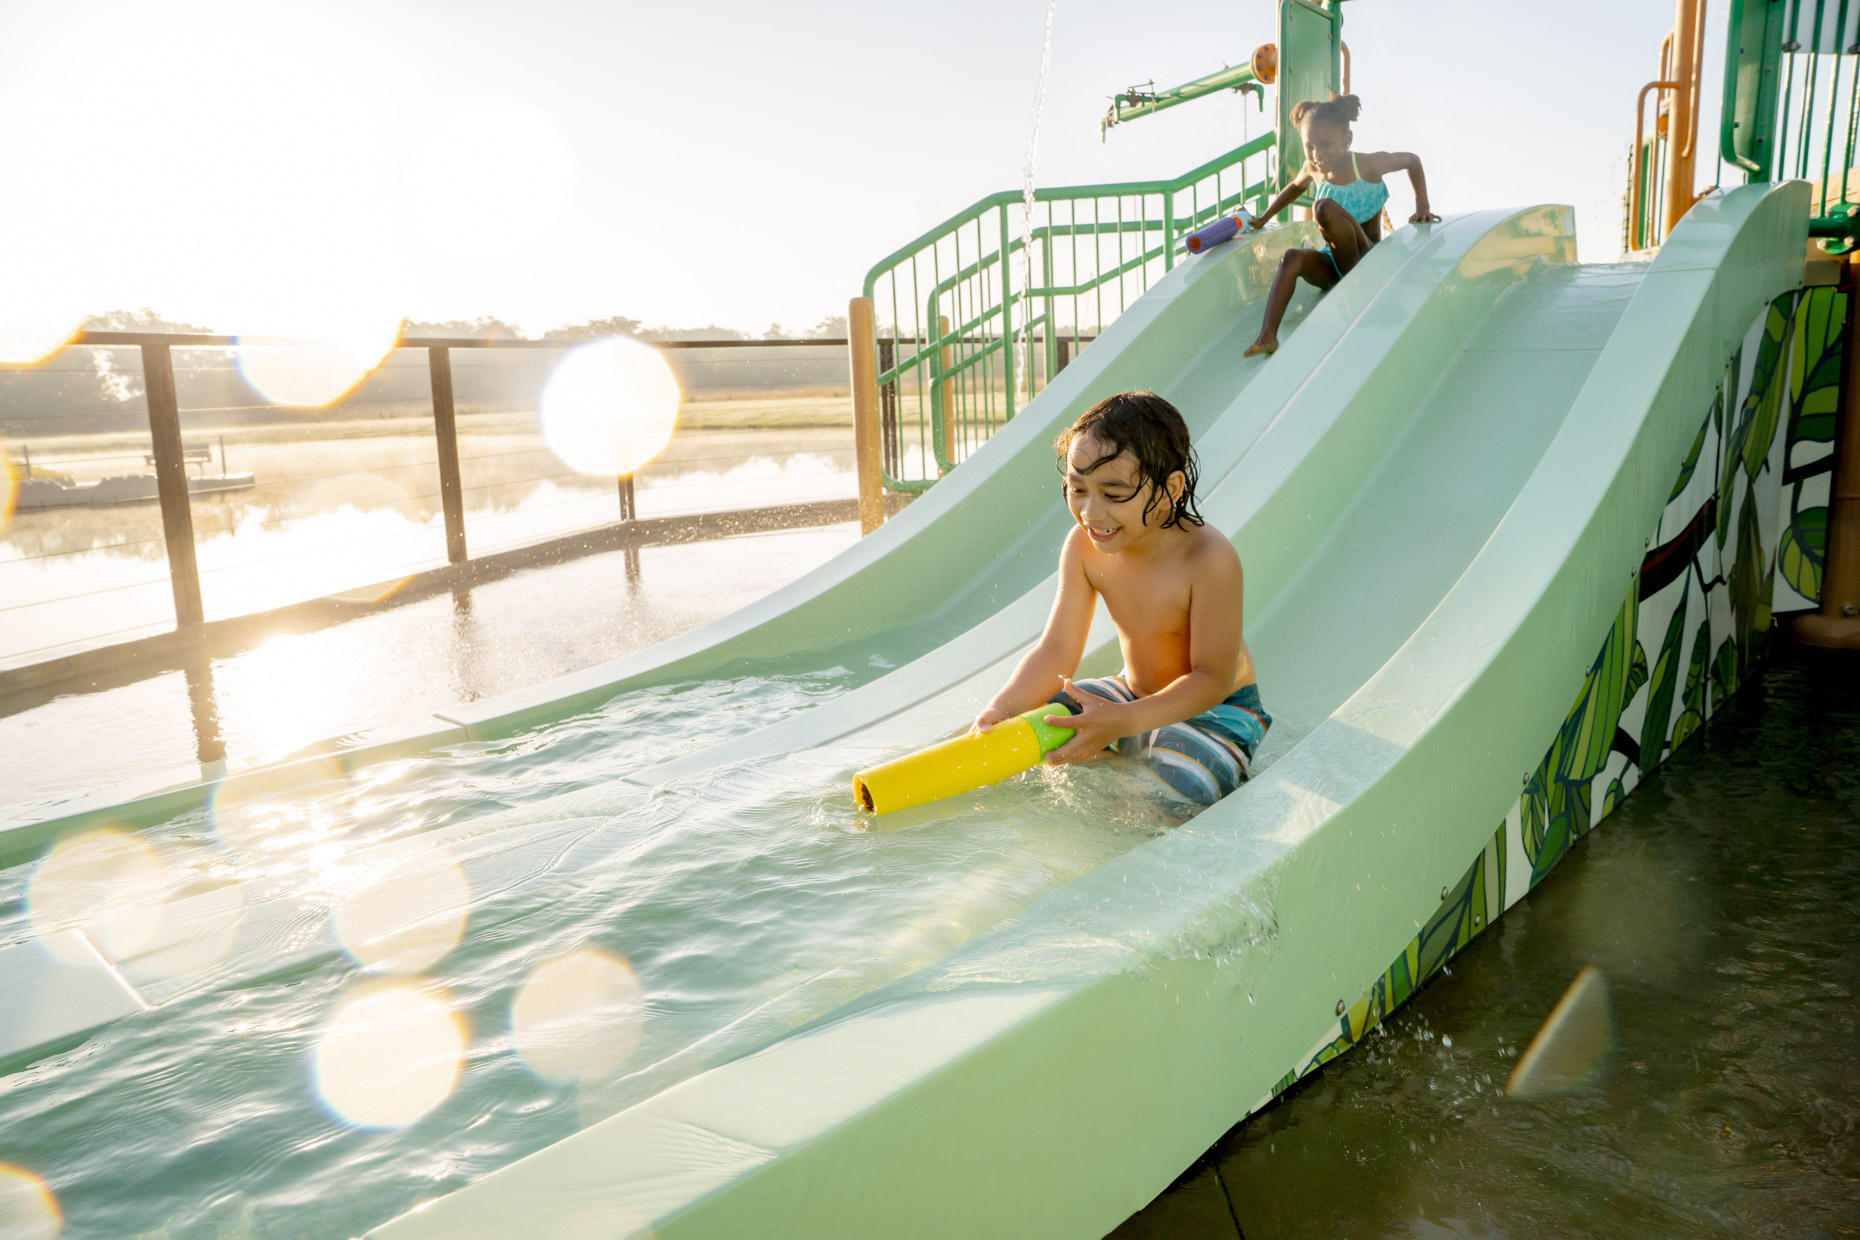 Children playing on slide at restort water park